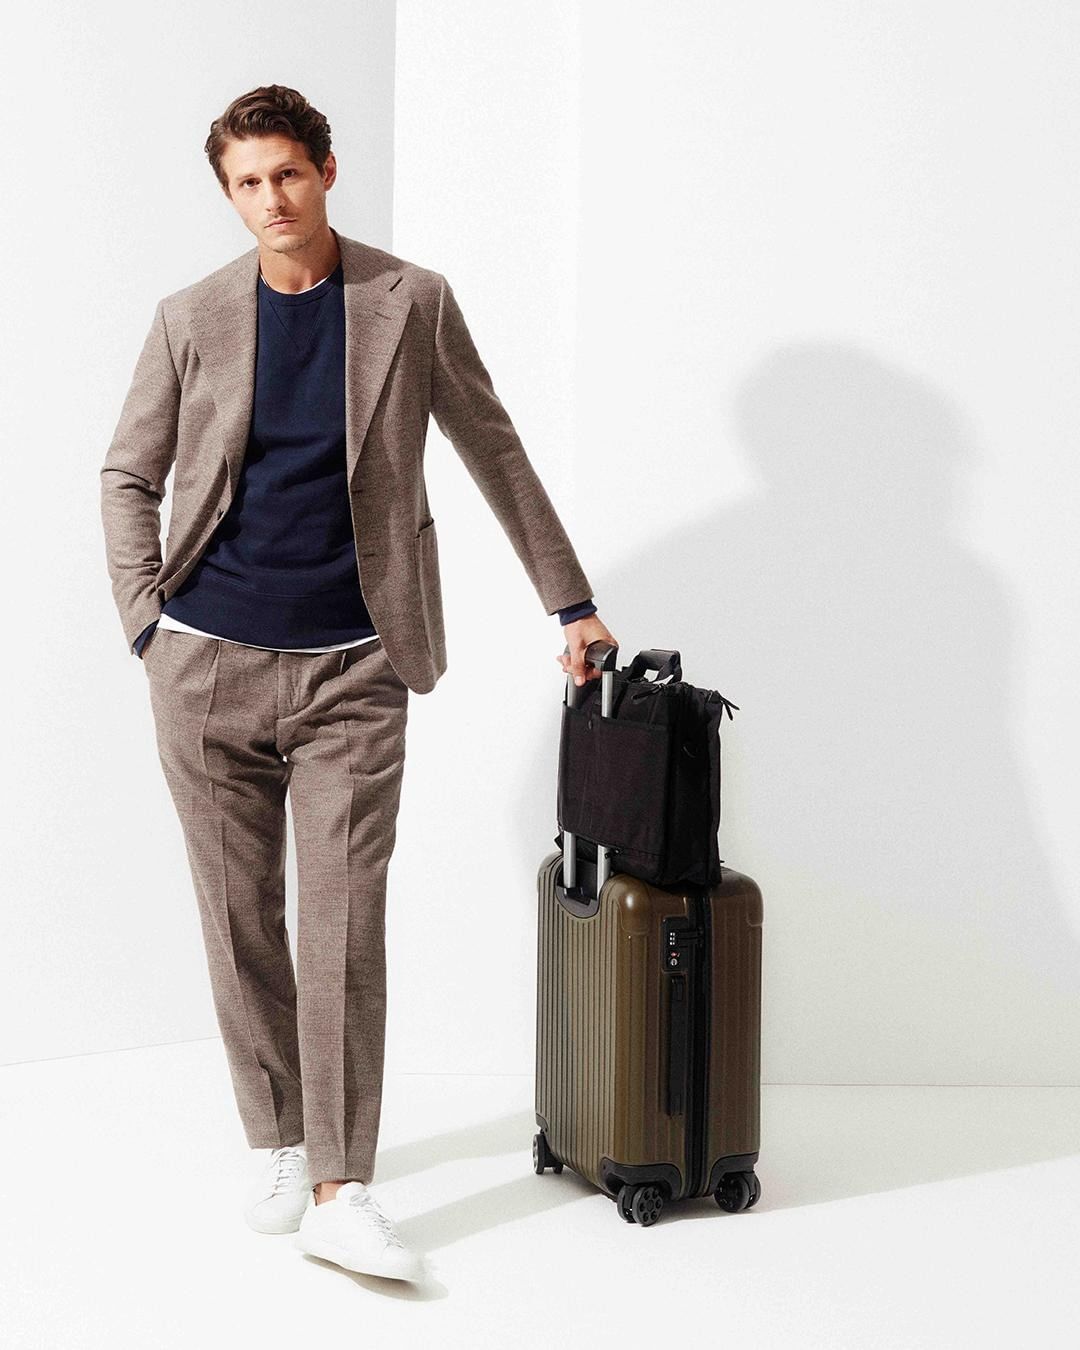 Smart Casual、Formal及Travel Suit有何分別？男裝品牌Trunk主理人Mats Klingberg分享西裝穿搭要點